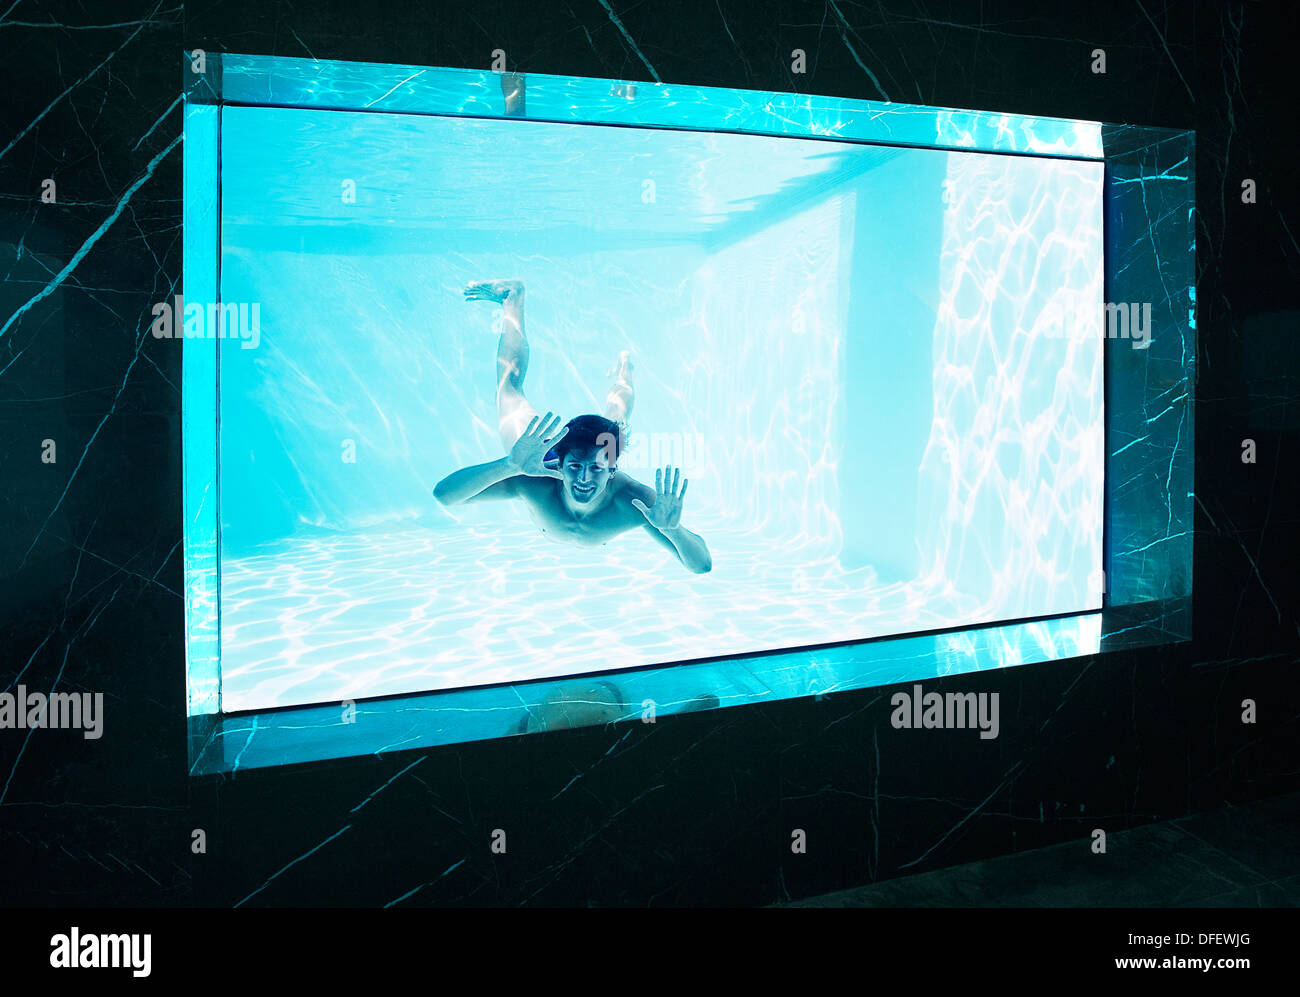 Man looking through window underwater in swimming pool Stock Photo